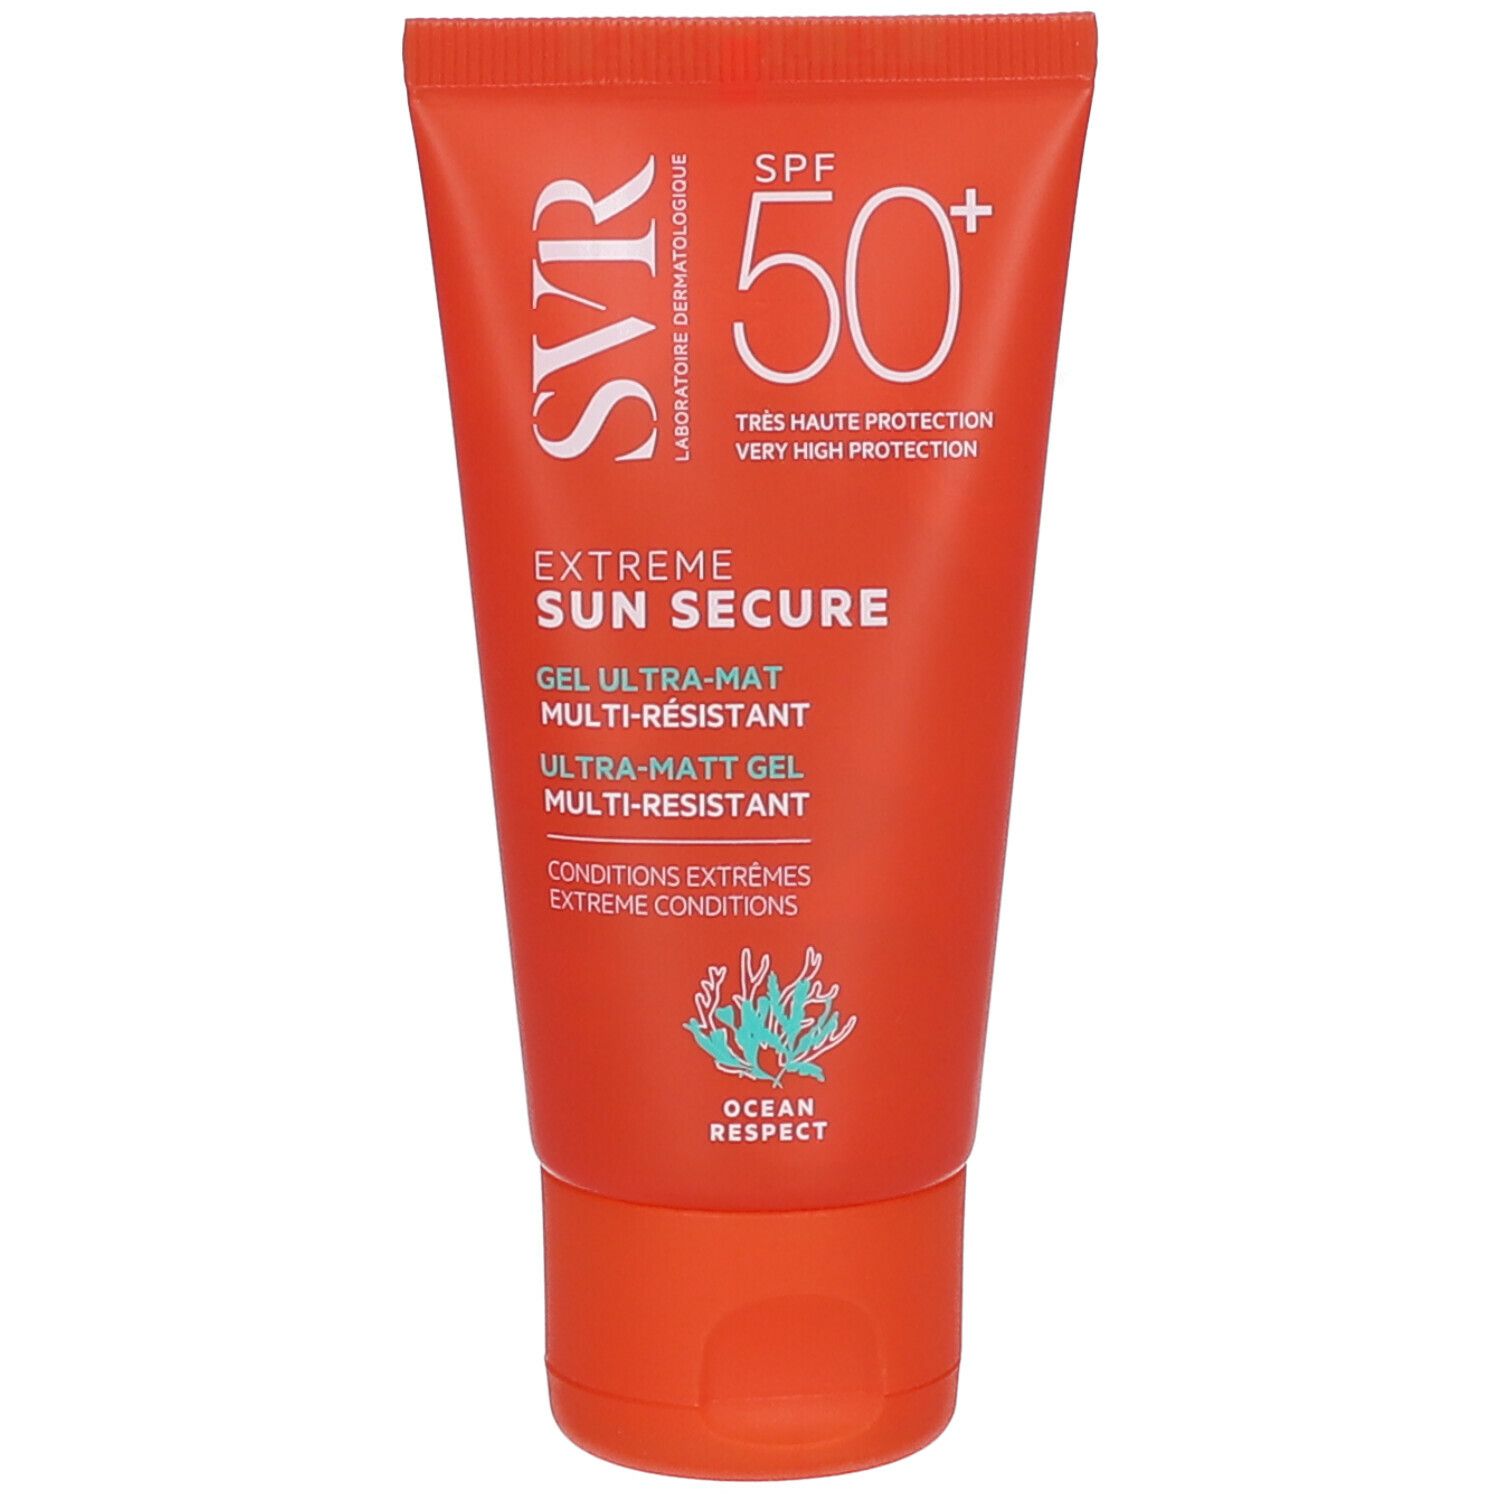 Image of SVR Sun Secure Extreme SPF 50 +